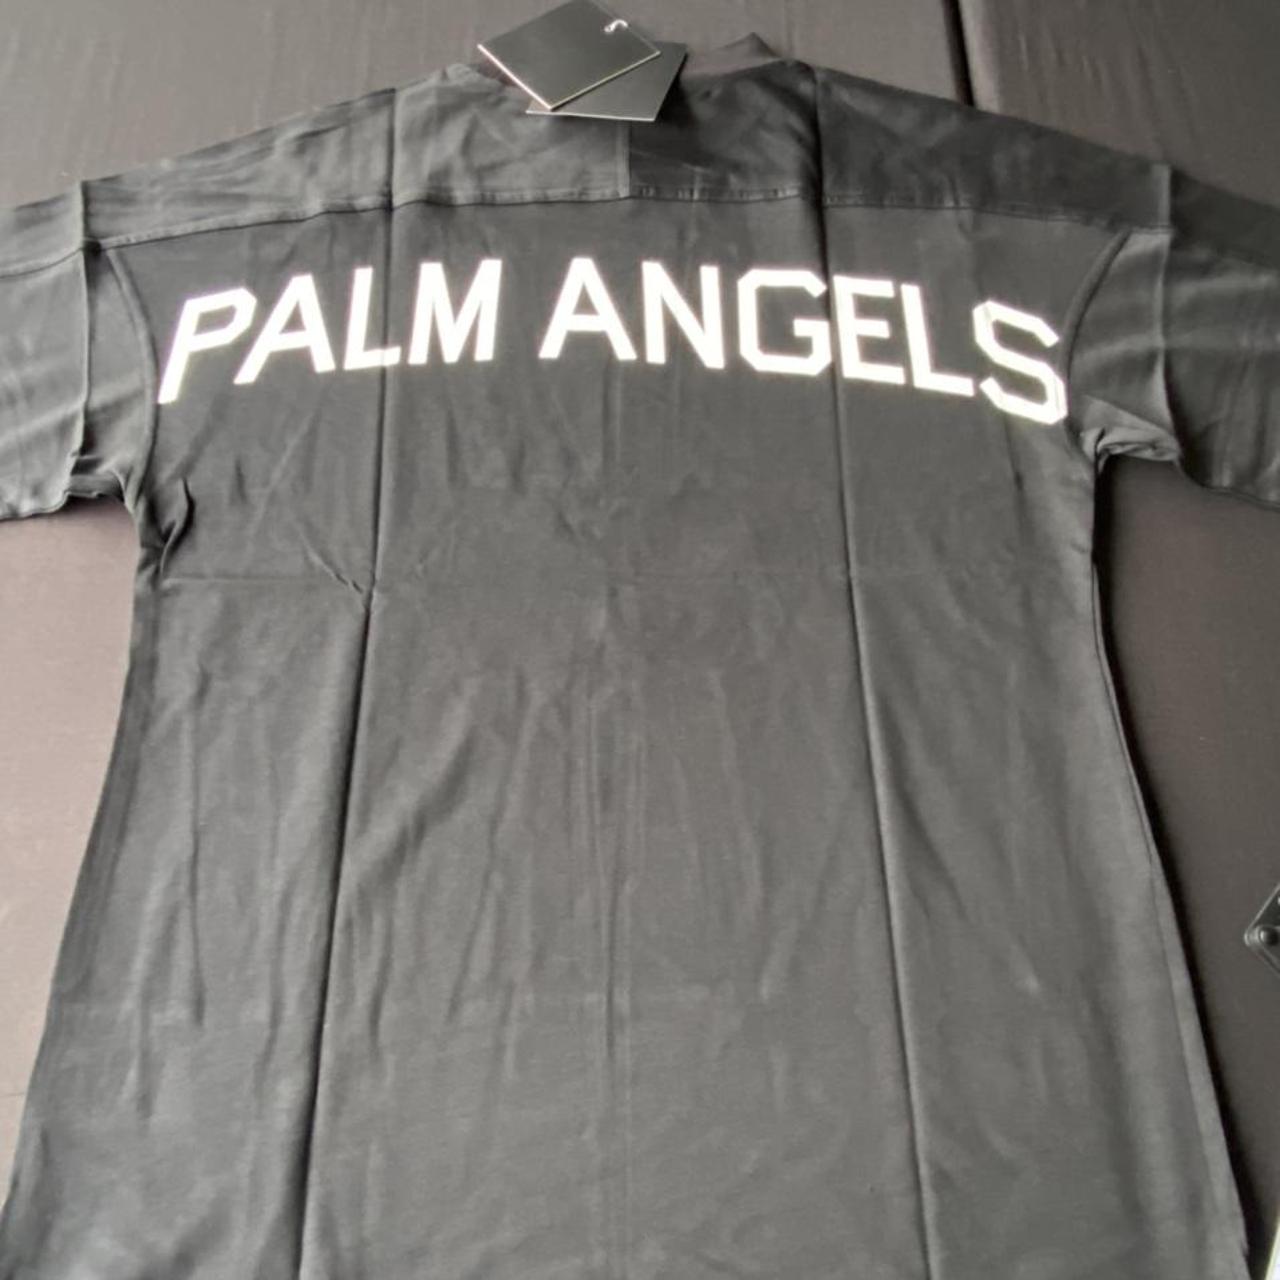 Product Image 2 - Palm Angels Shirt
Authentic
Tags
Medium

#PalmAngels #Black #Mermaid